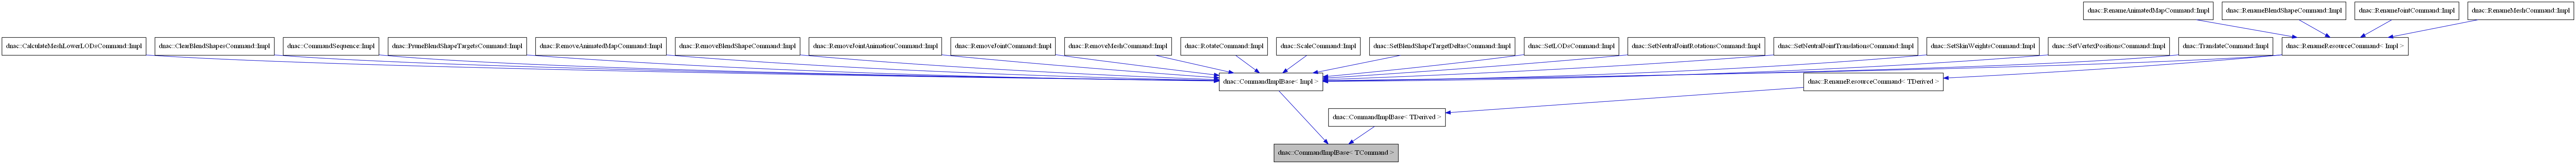 digraph {
    graph [bgcolor="#00000000"]
    node [shape=rectangle style=filled fillcolor="#FFFFFF" font=Helvetica padding=2]
    edge [color="#1414CE"]
    "2" [label="dnac::CommandImplBase< Impl >" tooltip="dnac::CommandImplBase< Impl >"]
    "26" [label="dnac::CommandImplBase< TDerived >" tooltip="dnac::CommandImplBase< TDerived >"]
    "3" [label="dnac::RenameResourceCommand< Impl >" tooltip="dnac::RenameResourceCommand< Impl >"]
    "8" [label="dnac::CalculateMeshLowerLODsCommand::Impl" tooltip="dnac::CalculateMeshLowerLODsCommand::Impl"]
    "9" [label="dnac::ClearBlendShapesCommand::Impl" tooltip="dnac::ClearBlendShapesCommand::Impl"]
    "1" [label="dnac::CommandImplBase< TCommand >" tooltip="dnac::CommandImplBase< TCommand >" fillcolor="#BFBFBF"]
    "10" [label="dnac::CommandSequence::Impl" tooltip="dnac::CommandSequence::Impl"]
    "11" [label="dnac::PruneBlendShapeTargetsCommand::Impl" tooltip="dnac::PruneBlendShapeTargetsCommand::Impl"]
    "12" [label="dnac::RemoveAnimatedMapCommand::Impl" tooltip="dnac::RemoveAnimatedMapCommand::Impl"]
    "13" [label="dnac::RemoveBlendShapeCommand::Impl" tooltip="dnac::RemoveBlendShapeCommand::Impl"]
    "14" [label="dnac::RemoveJointAnimationCommand::Impl" tooltip="dnac::RemoveJointAnimationCommand::Impl"]
    "15" [label="dnac::RemoveJointCommand::Impl" tooltip="dnac::RemoveJointCommand::Impl"]
    "16" [label="dnac::RemoveMeshCommand::Impl" tooltip="dnac::RemoveMeshCommand::Impl"]
    "4" [label="dnac::RenameAnimatedMapCommand::Impl" tooltip="dnac::RenameAnimatedMapCommand::Impl"]
    "5" [label="dnac::RenameBlendShapeCommand::Impl" tooltip="dnac::RenameBlendShapeCommand::Impl"]
    "6" [label="dnac::RenameJointCommand::Impl" tooltip="dnac::RenameJointCommand::Impl"]
    "7" [label="dnac::RenameMeshCommand::Impl" tooltip="dnac::RenameMeshCommand::Impl"]
    "27" [label="dnac::RenameResourceCommand< TDerived >" tooltip="dnac::RenameResourceCommand< TDerived >"]
    "17" [label="dnac::RotateCommand::Impl" tooltip="dnac::RotateCommand::Impl"]
    "18" [label="dnac::ScaleCommand::Impl" tooltip="dnac::ScaleCommand::Impl"]
    "19" [label="dnac::SetBlendShapeTargetDeltasCommand::Impl" tooltip="dnac::SetBlendShapeTargetDeltasCommand::Impl"]
    "20" [label="dnac::SetLODsCommand::Impl" tooltip="dnac::SetLODsCommand::Impl"]
    "21" [label="dnac::SetNeutralJointRotationsCommand::Impl" tooltip="dnac::SetNeutralJointRotationsCommand::Impl"]
    "22" [label="dnac::SetNeutralJointTranslationsCommand::Impl" tooltip="dnac::SetNeutralJointTranslationsCommand::Impl"]
    "23" [label="dnac::SetSkinWeightsCommand::Impl" tooltip="dnac::SetSkinWeightsCommand::Impl"]
    "24" [label="dnac::SetVertexPositionsCommand::Impl" tooltip="dnac::SetVertexPositionsCommand::Impl"]
    "25" [label="dnac::TranslateCommand::Impl" tooltip="dnac::TranslateCommand::Impl"]
    "2" -> "1" [dir=forward tooltip="template-instance"]
    "26" -> "1" [dir=forward tooltip="template-instance"]
    "3" -> "2" [dir=forward tooltip="public-inheritance"]
    "3" -> "27" [dir=forward tooltip="template-instance"]
    "8" -> "2" [dir=forward tooltip="public-inheritance"]
    "9" -> "2" [dir=forward tooltip="public-inheritance"]
    "10" -> "2" [dir=forward tooltip="public-inheritance"]
    "11" -> "2" [dir=forward tooltip="public-inheritance"]
    "12" -> "2" [dir=forward tooltip="public-inheritance"]
    "13" -> "2" [dir=forward tooltip="public-inheritance"]
    "14" -> "2" [dir=forward tooltip="public-inheritance"]
    "15" -> "2" [dir=forward tooltip="public-inheritance"]
    "16" -> "2" [dir=forward tooltip="public-inheritance"]
    "4" -> "3" [dir=forward tooltip="public-inheritance"]
    "5" -> "3" [dir=forward tooltip="public-inheritance"]
    "6" -> "3" [dir=forward tooltip="public-inheritance"]
    "7" -> "3" [dir=forward tooltip="public-inheritance"]
    "27" -> "26" [dir=forward tooltip="public-inheritance"]
    "17" -> "2" [dir=forward tooltip="public-inheritance"]
    "18" -> "2" [dir=forward tooltip="public-inheritance"]
    "19" -> "2" [dir=forward tooltip="public-inheritance"]
    "20" -> "2" [dir=forward tooltip="public-inheritance"]
    "21" -> "2" [dir=forward tooltip="public-inheritance"]
    "22" -> "2" [dir=forward tooltip="public-inheritance"]
    "23" -> "2" [dir=forward tooltip="public-inheritance"]
    "24" -> "2" [dir=forward tooltip="public-inheritance"]
    "25" -> "2" [dir=forward tooltip="public-inheritance"]
}